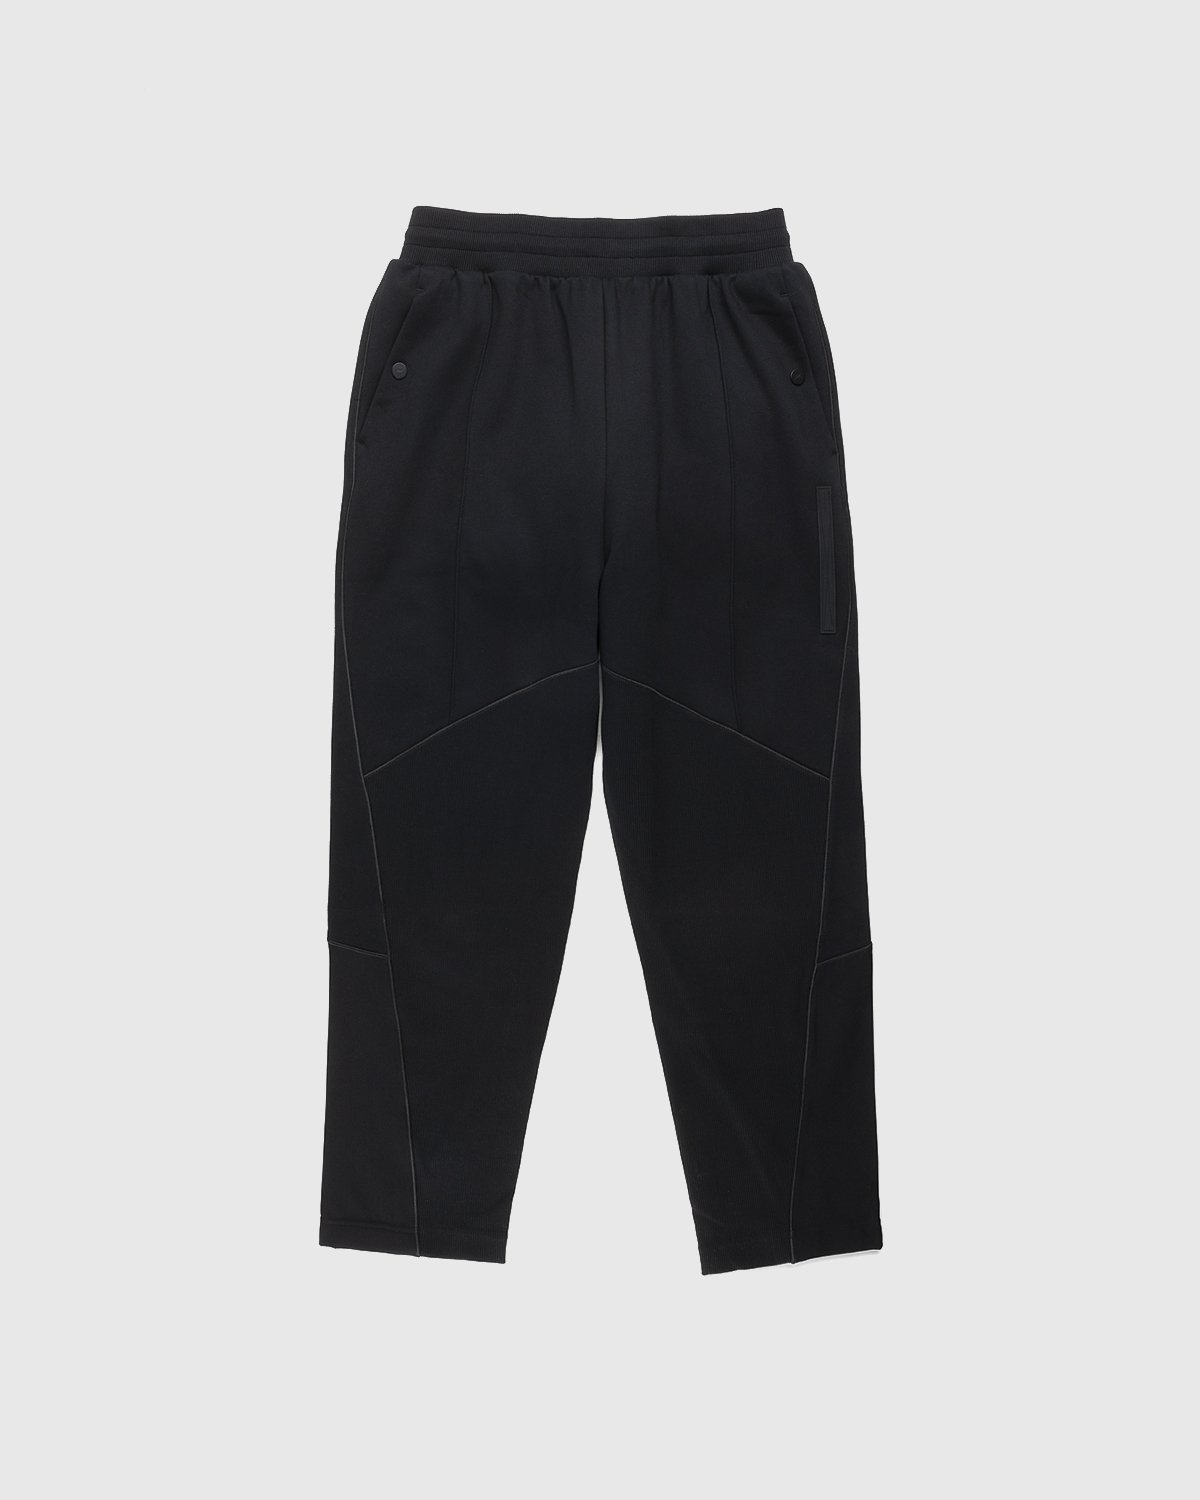 A-Cold-Wall* - Granular Sweatpants Black - Clothing - Black - Image 1